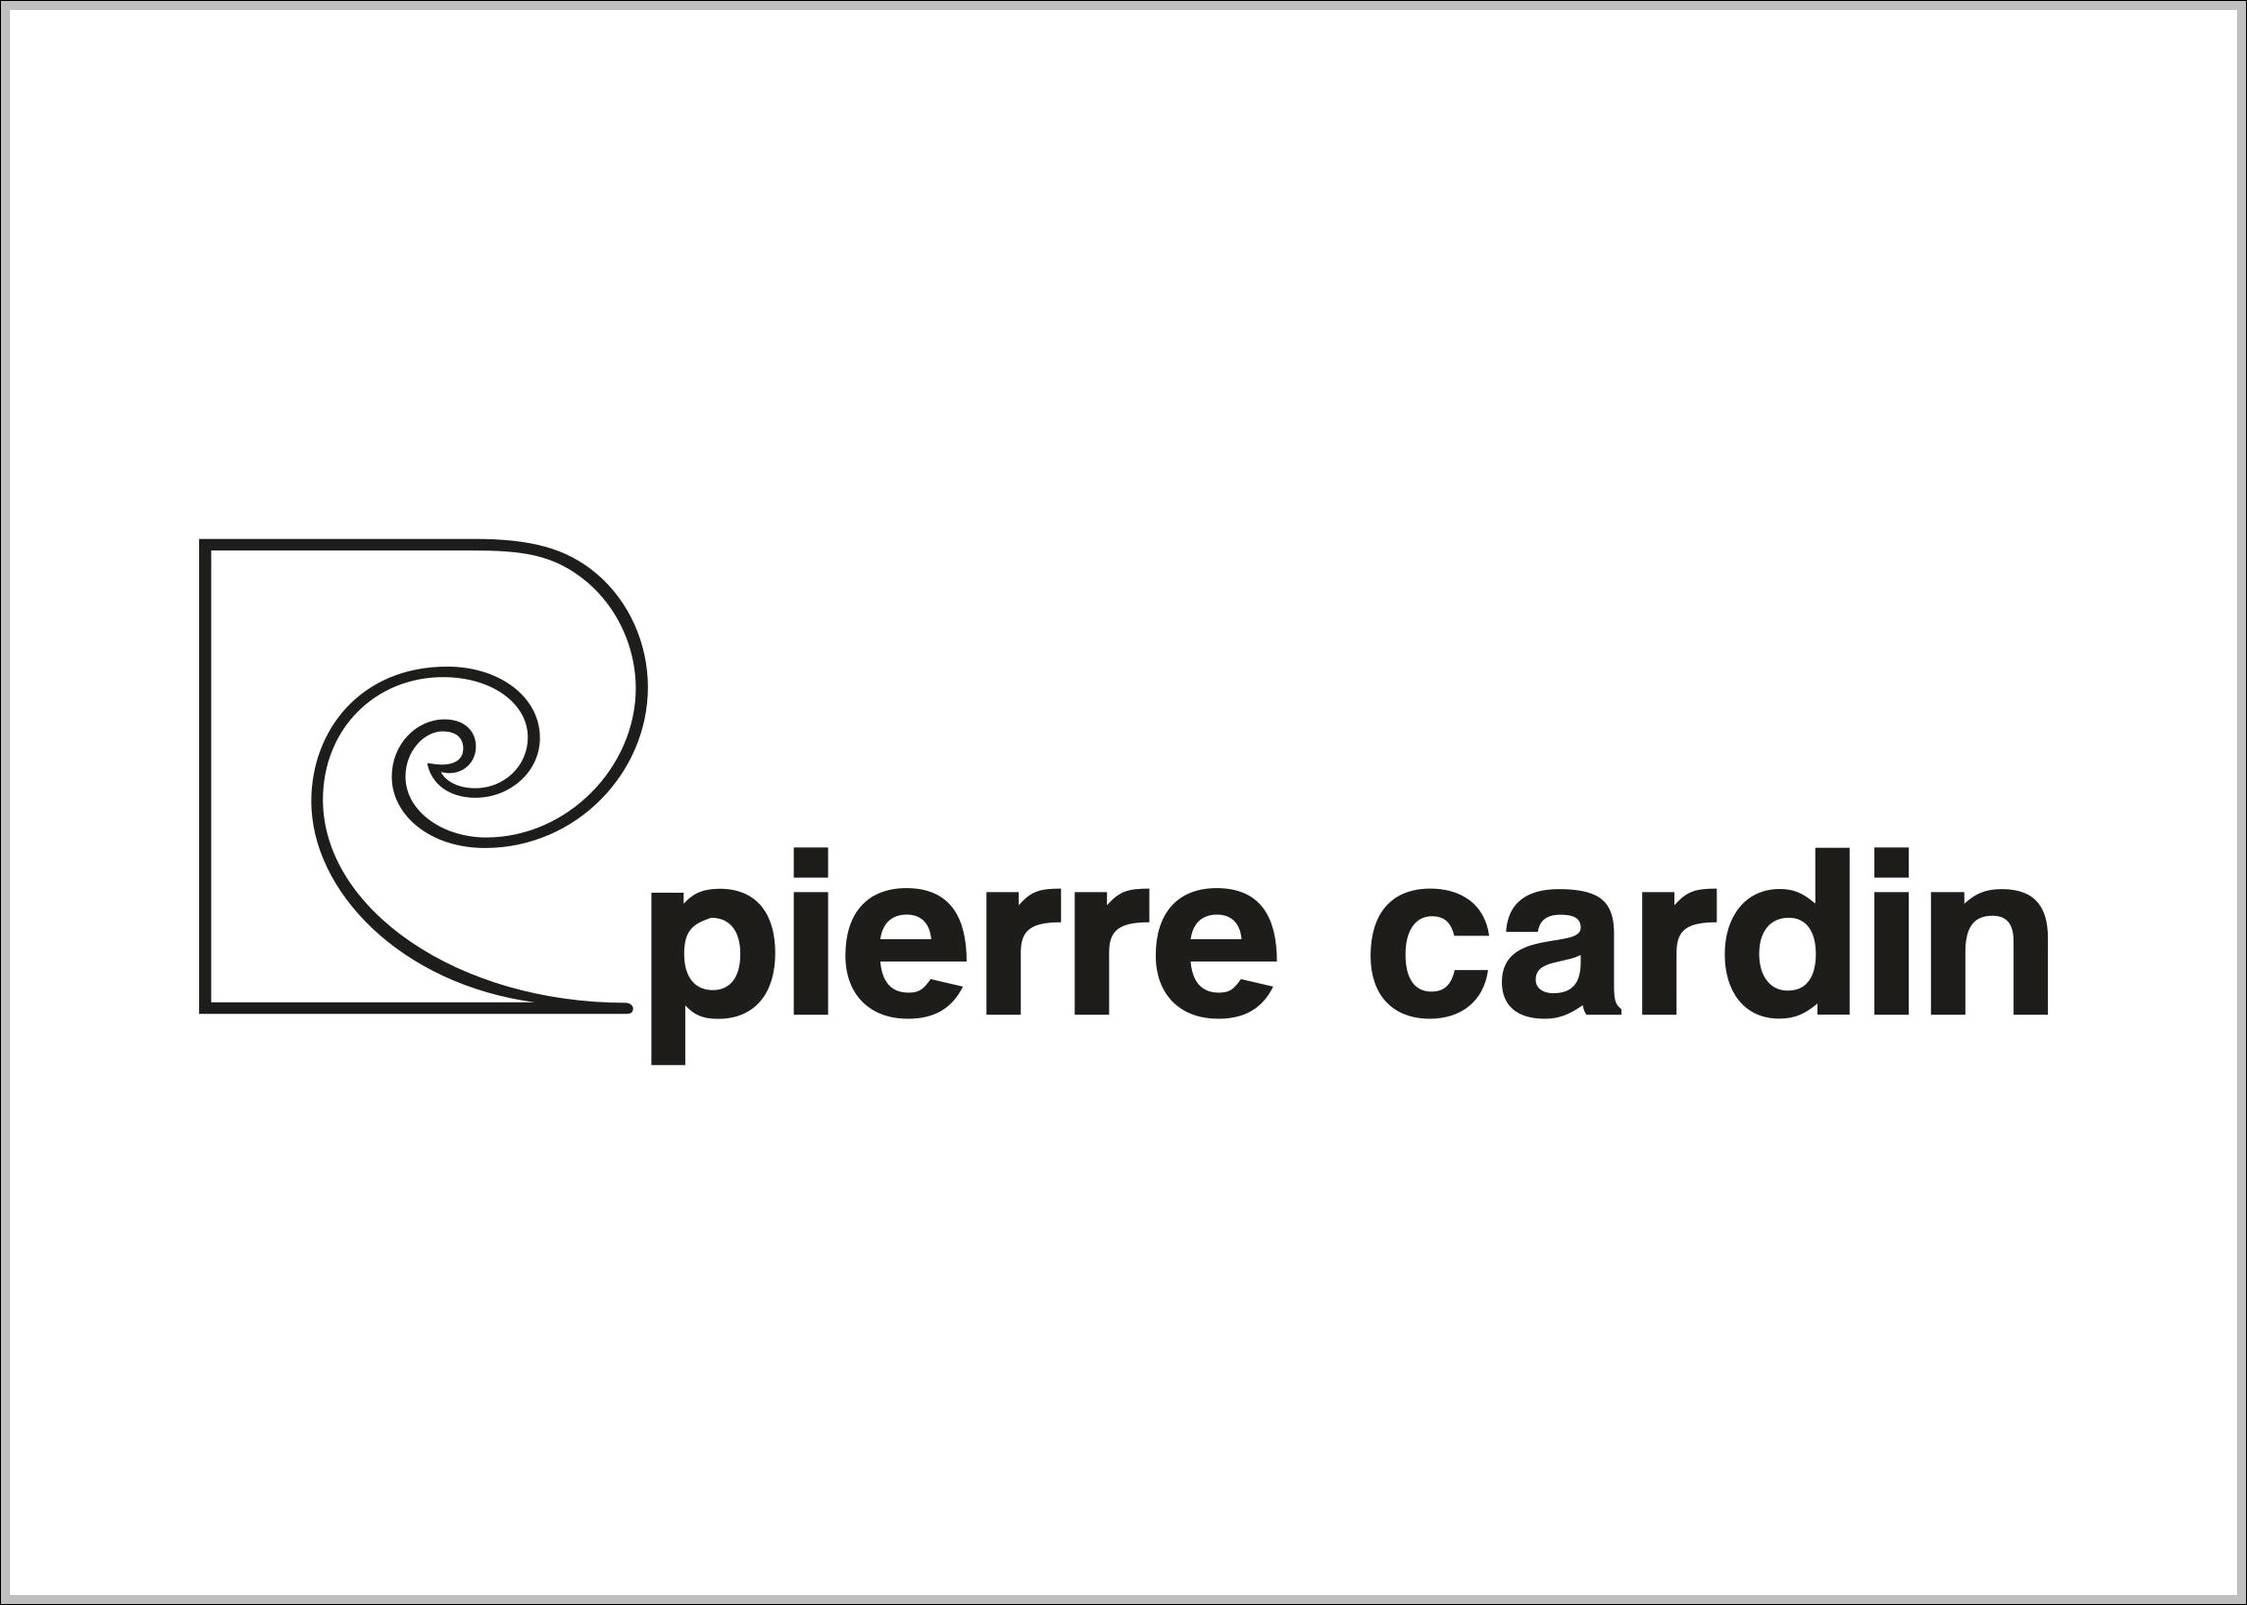 Pierre Cardin sign